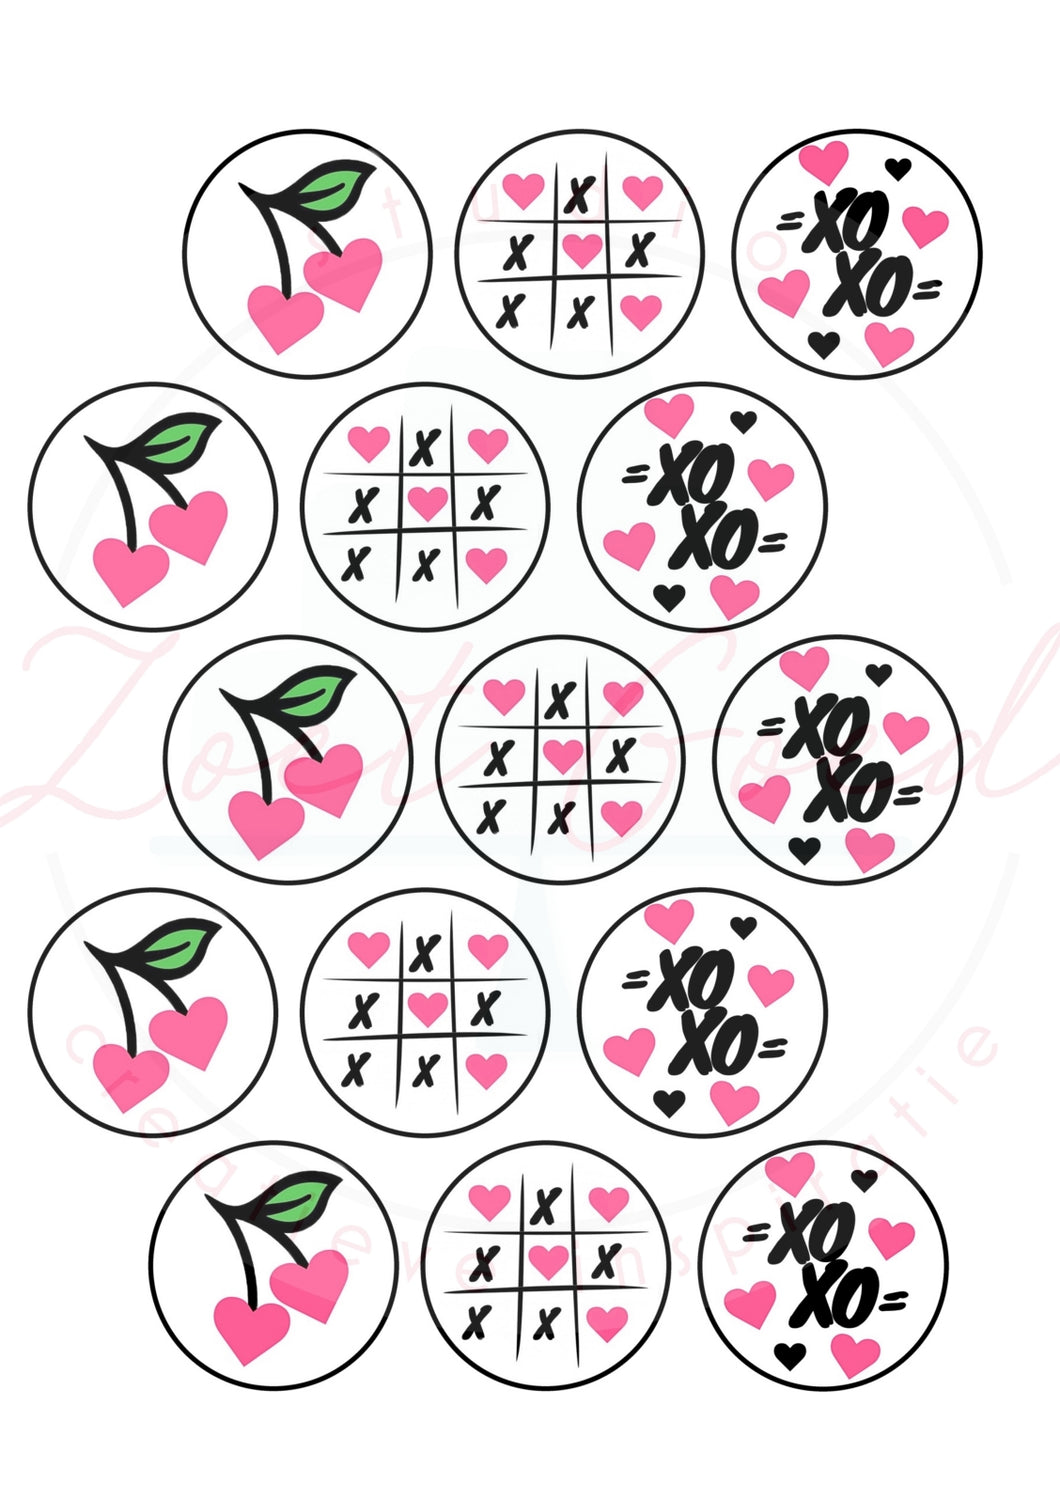 Eetbare prints - Love XOXO cupcake sheet